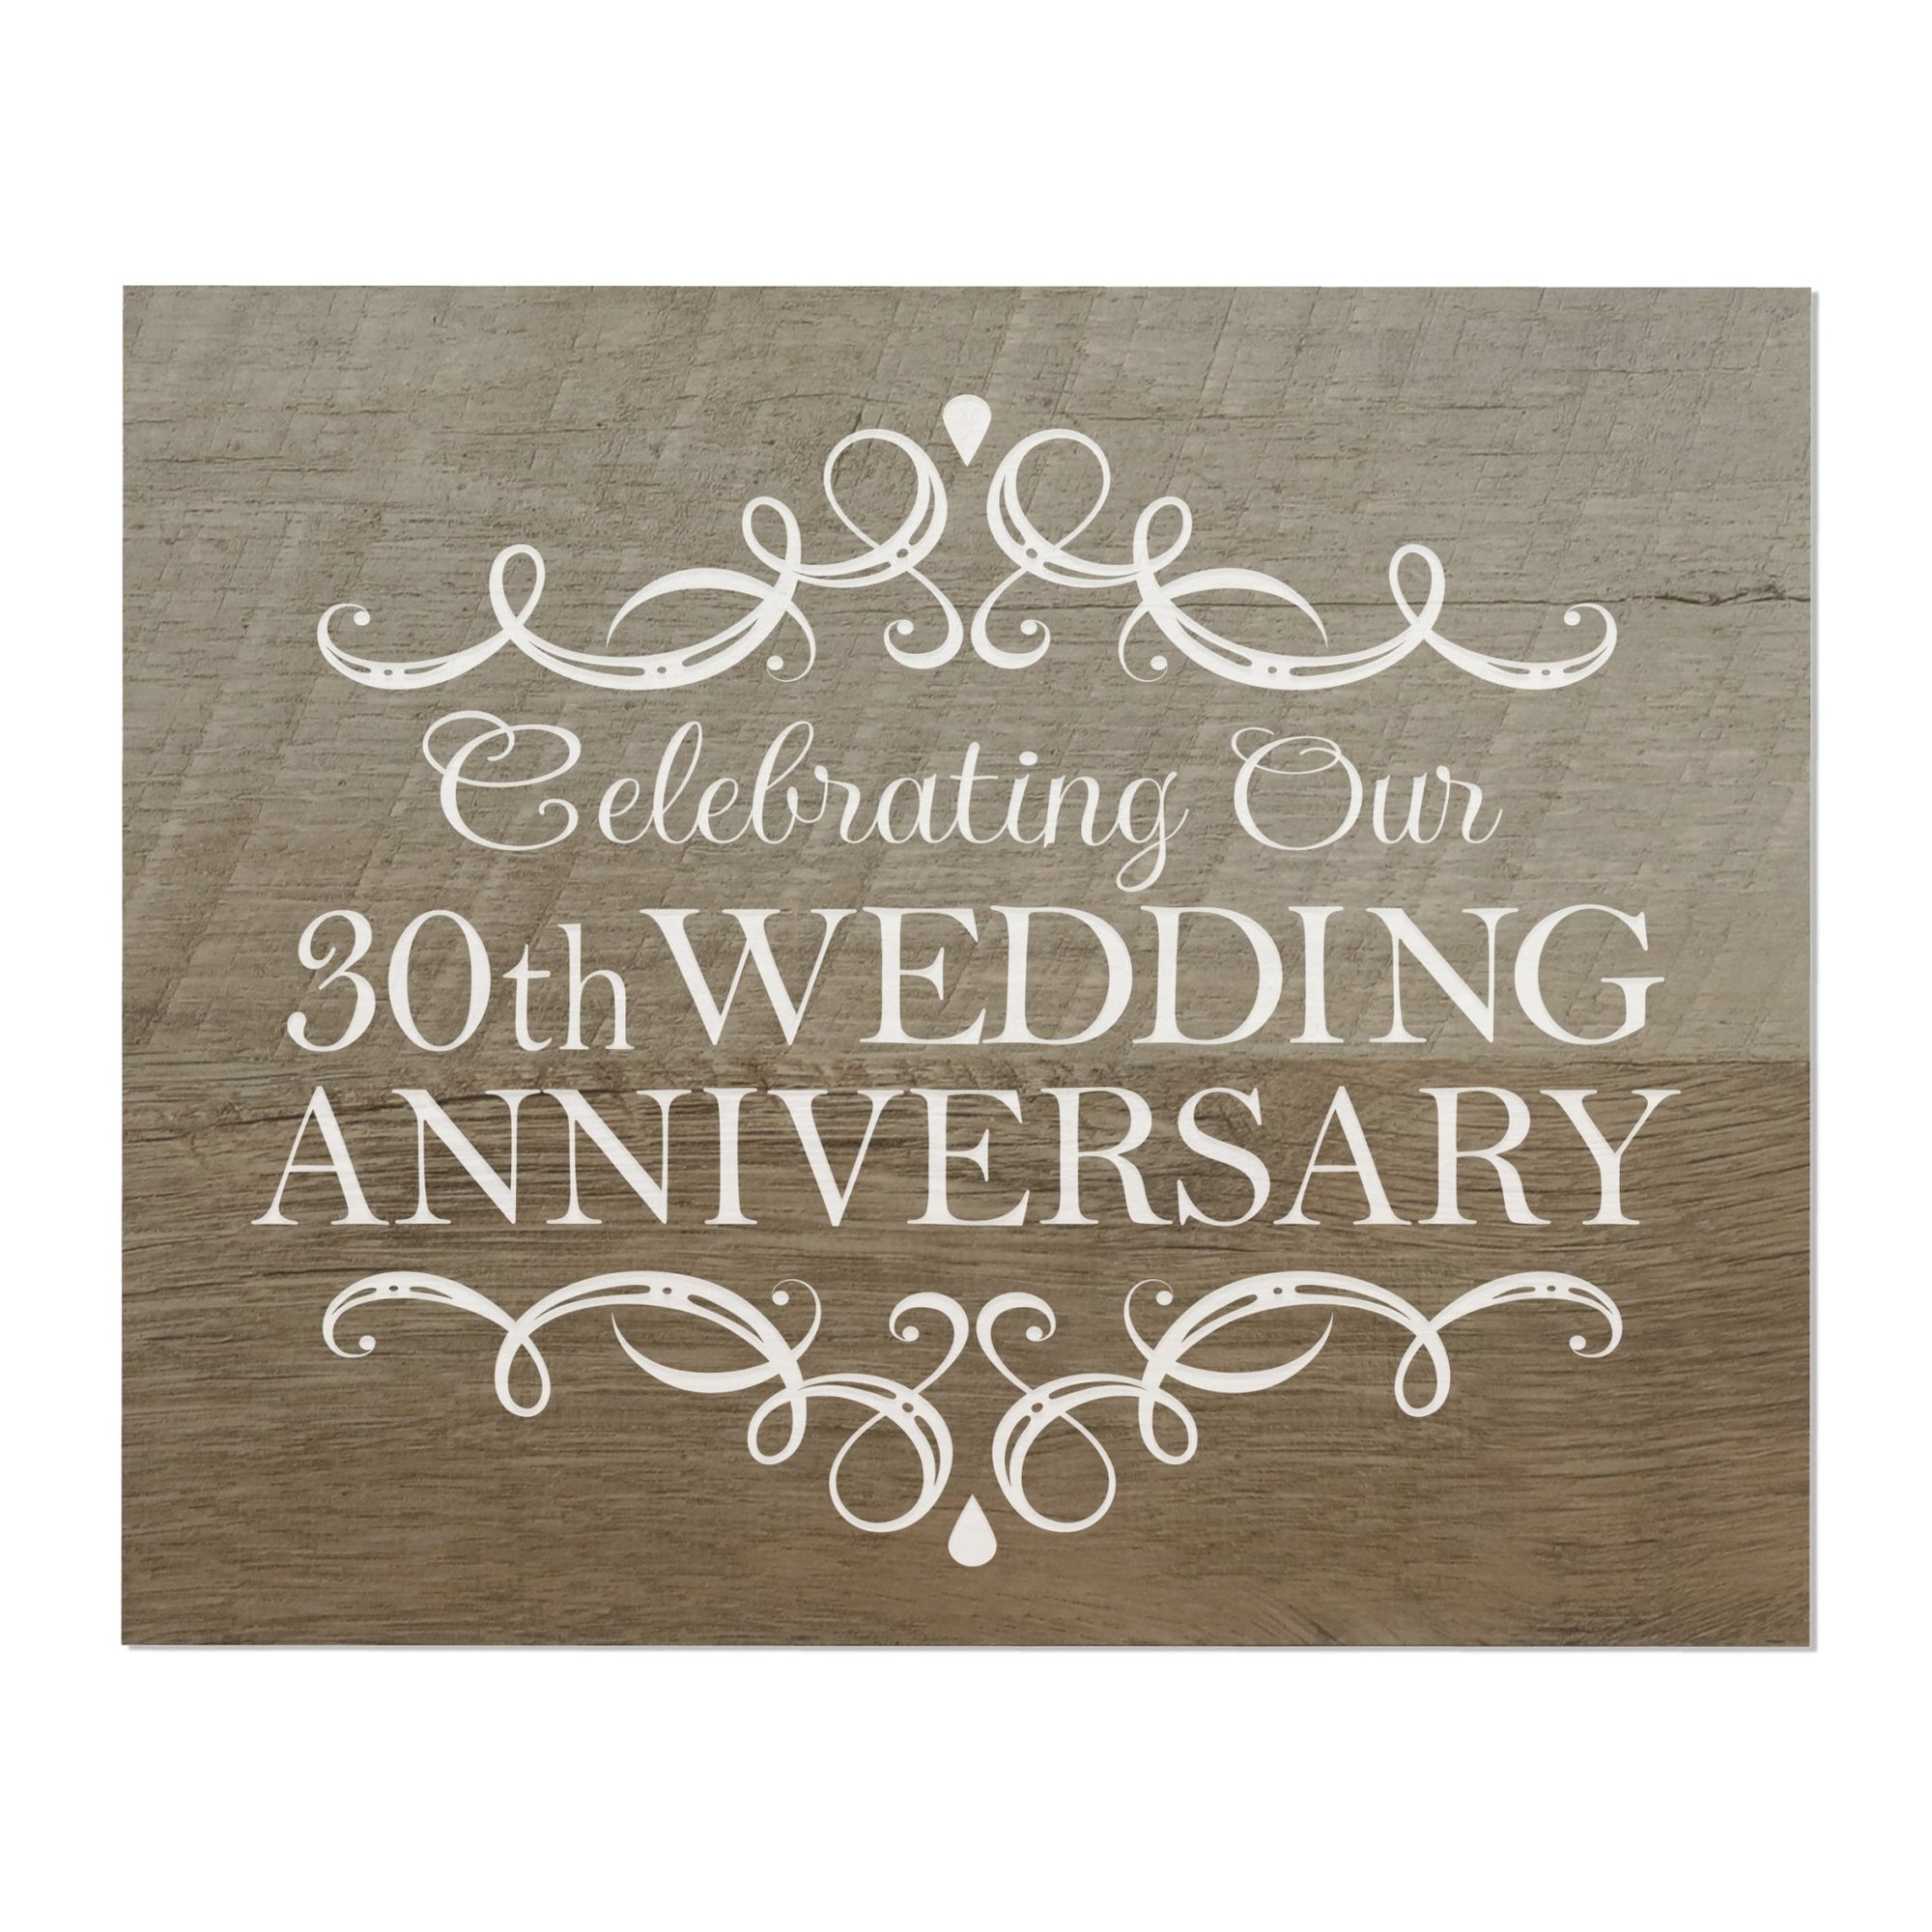 30th Wedding Anniversary Wall Plaque - Celebrating - LifeSong Milestones